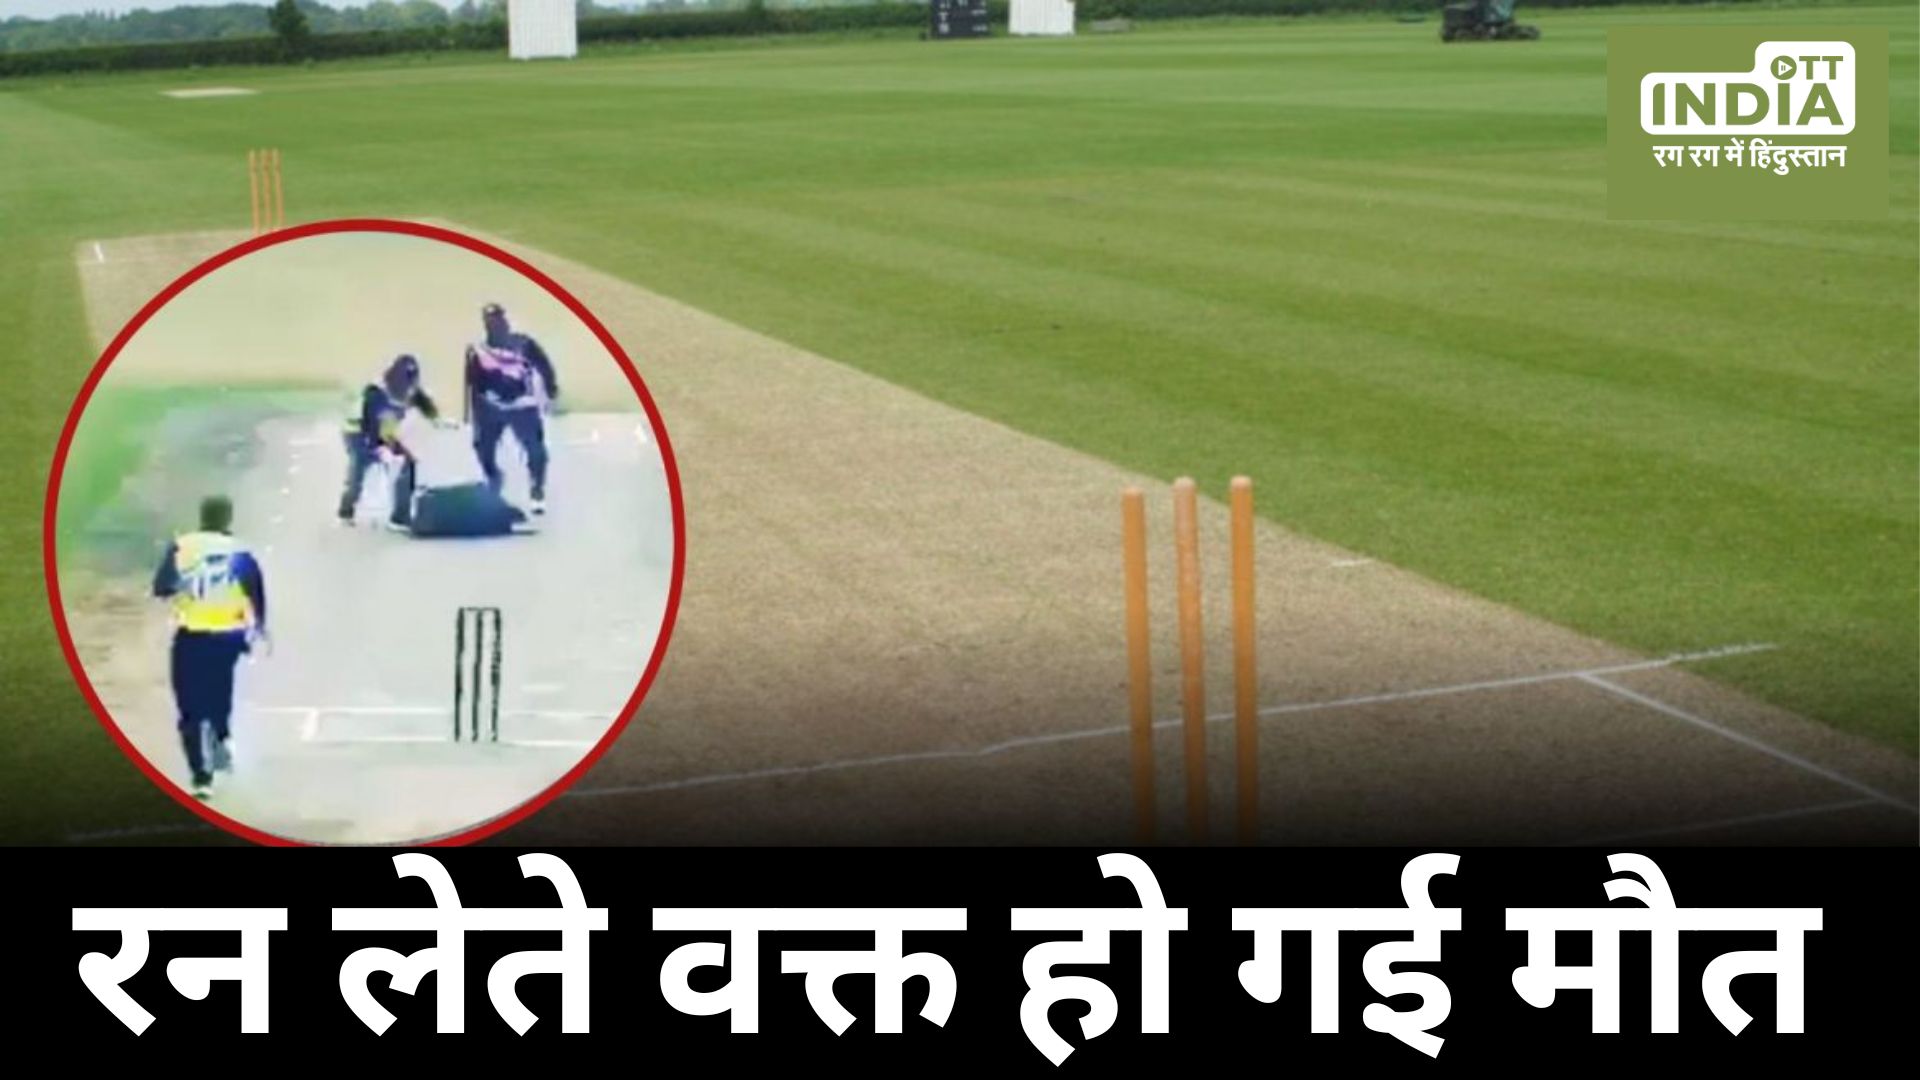 Noida Cricketer Heart Attack : क्रिकेट खेलते समय अचानक Batsman को आया Heart Attack, वायरल हुआ वीडियो…